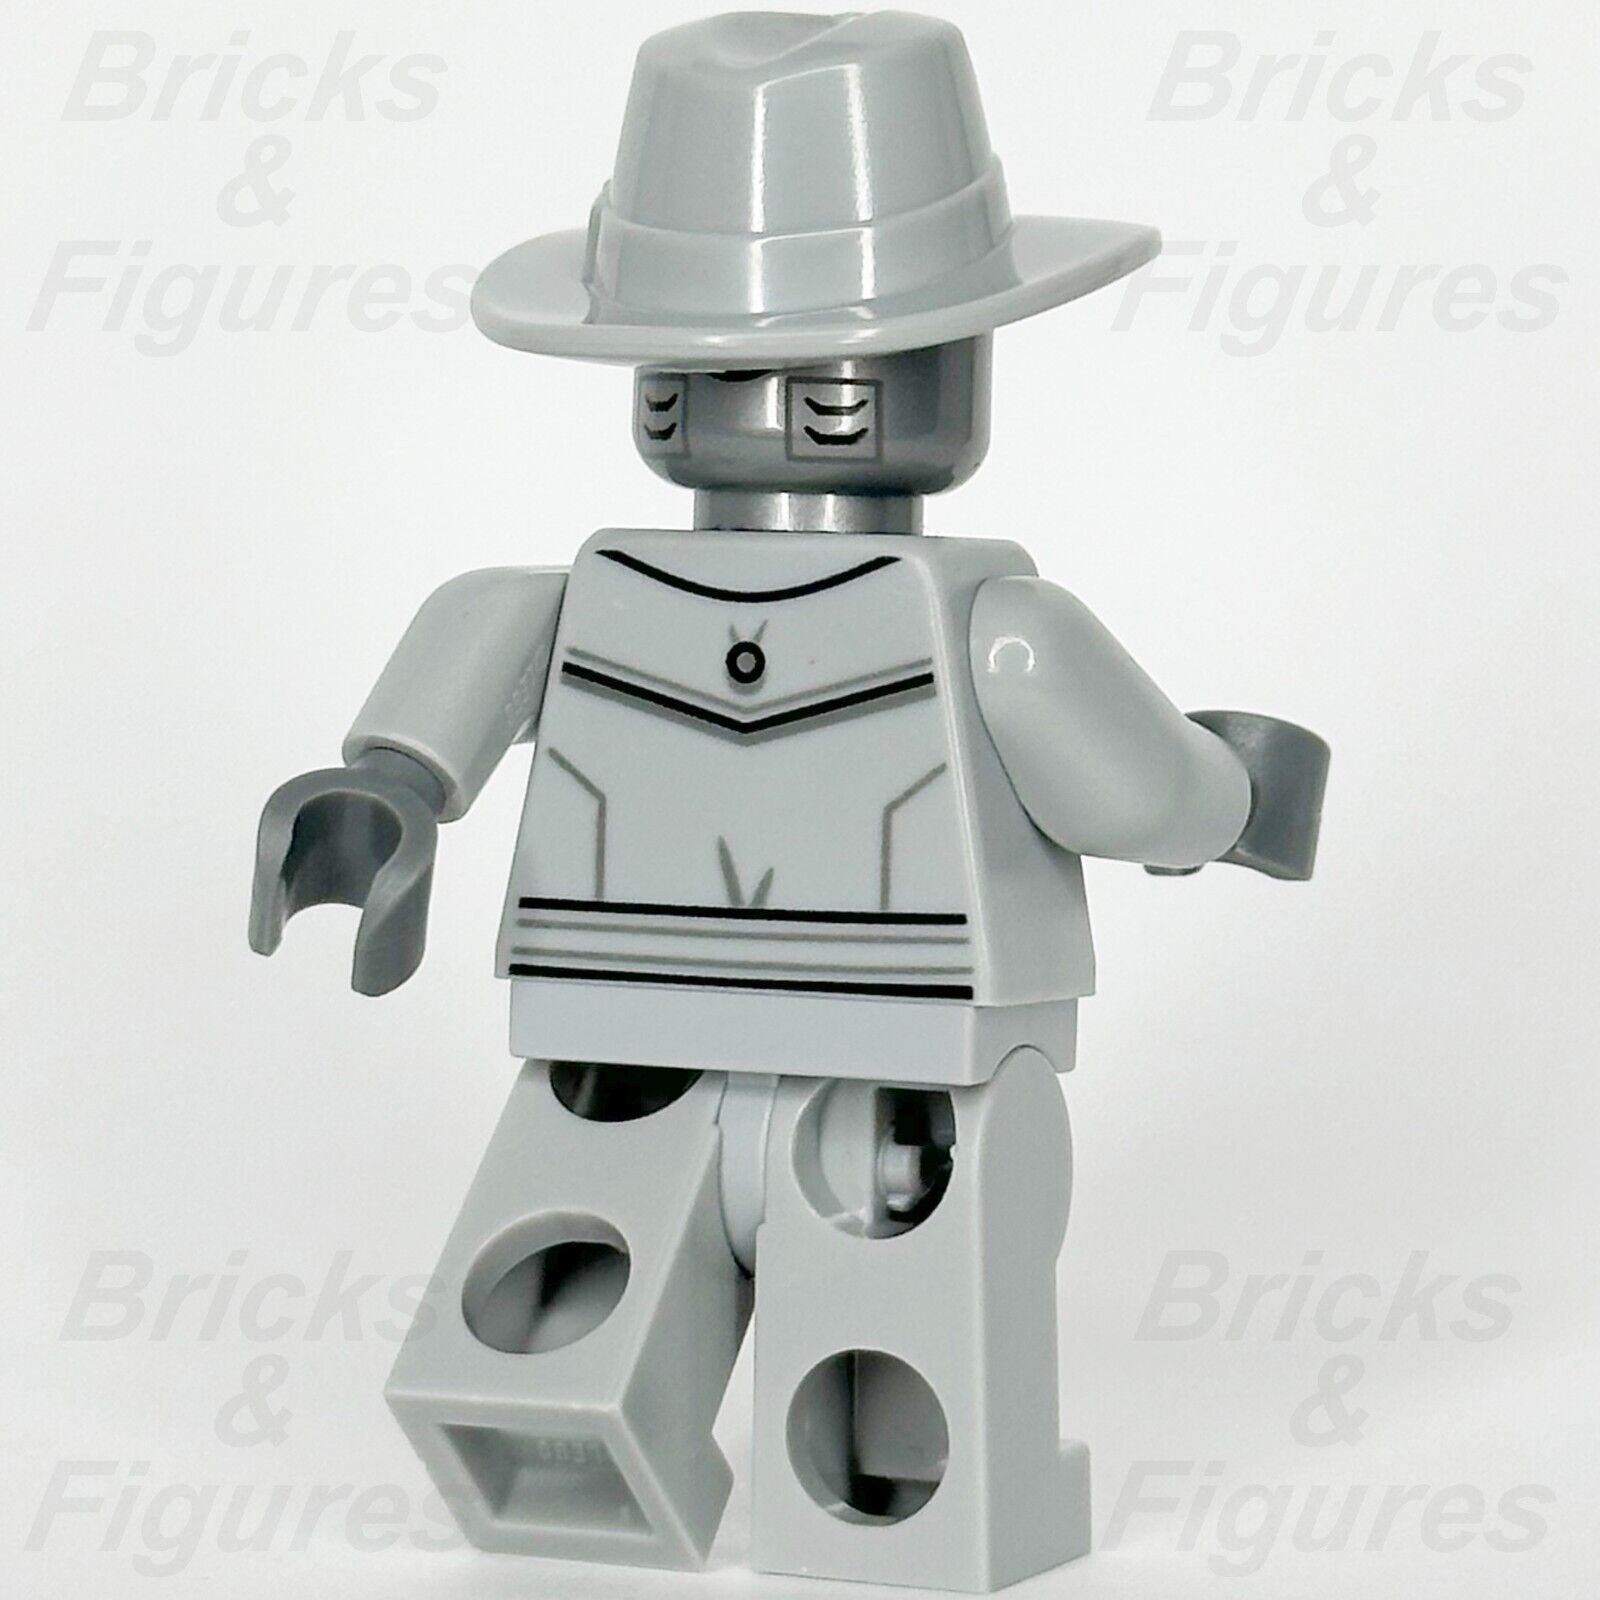 LEGO Ninjago Detective Zane Minifigure Dragons Rising Ninja 71799 njo837